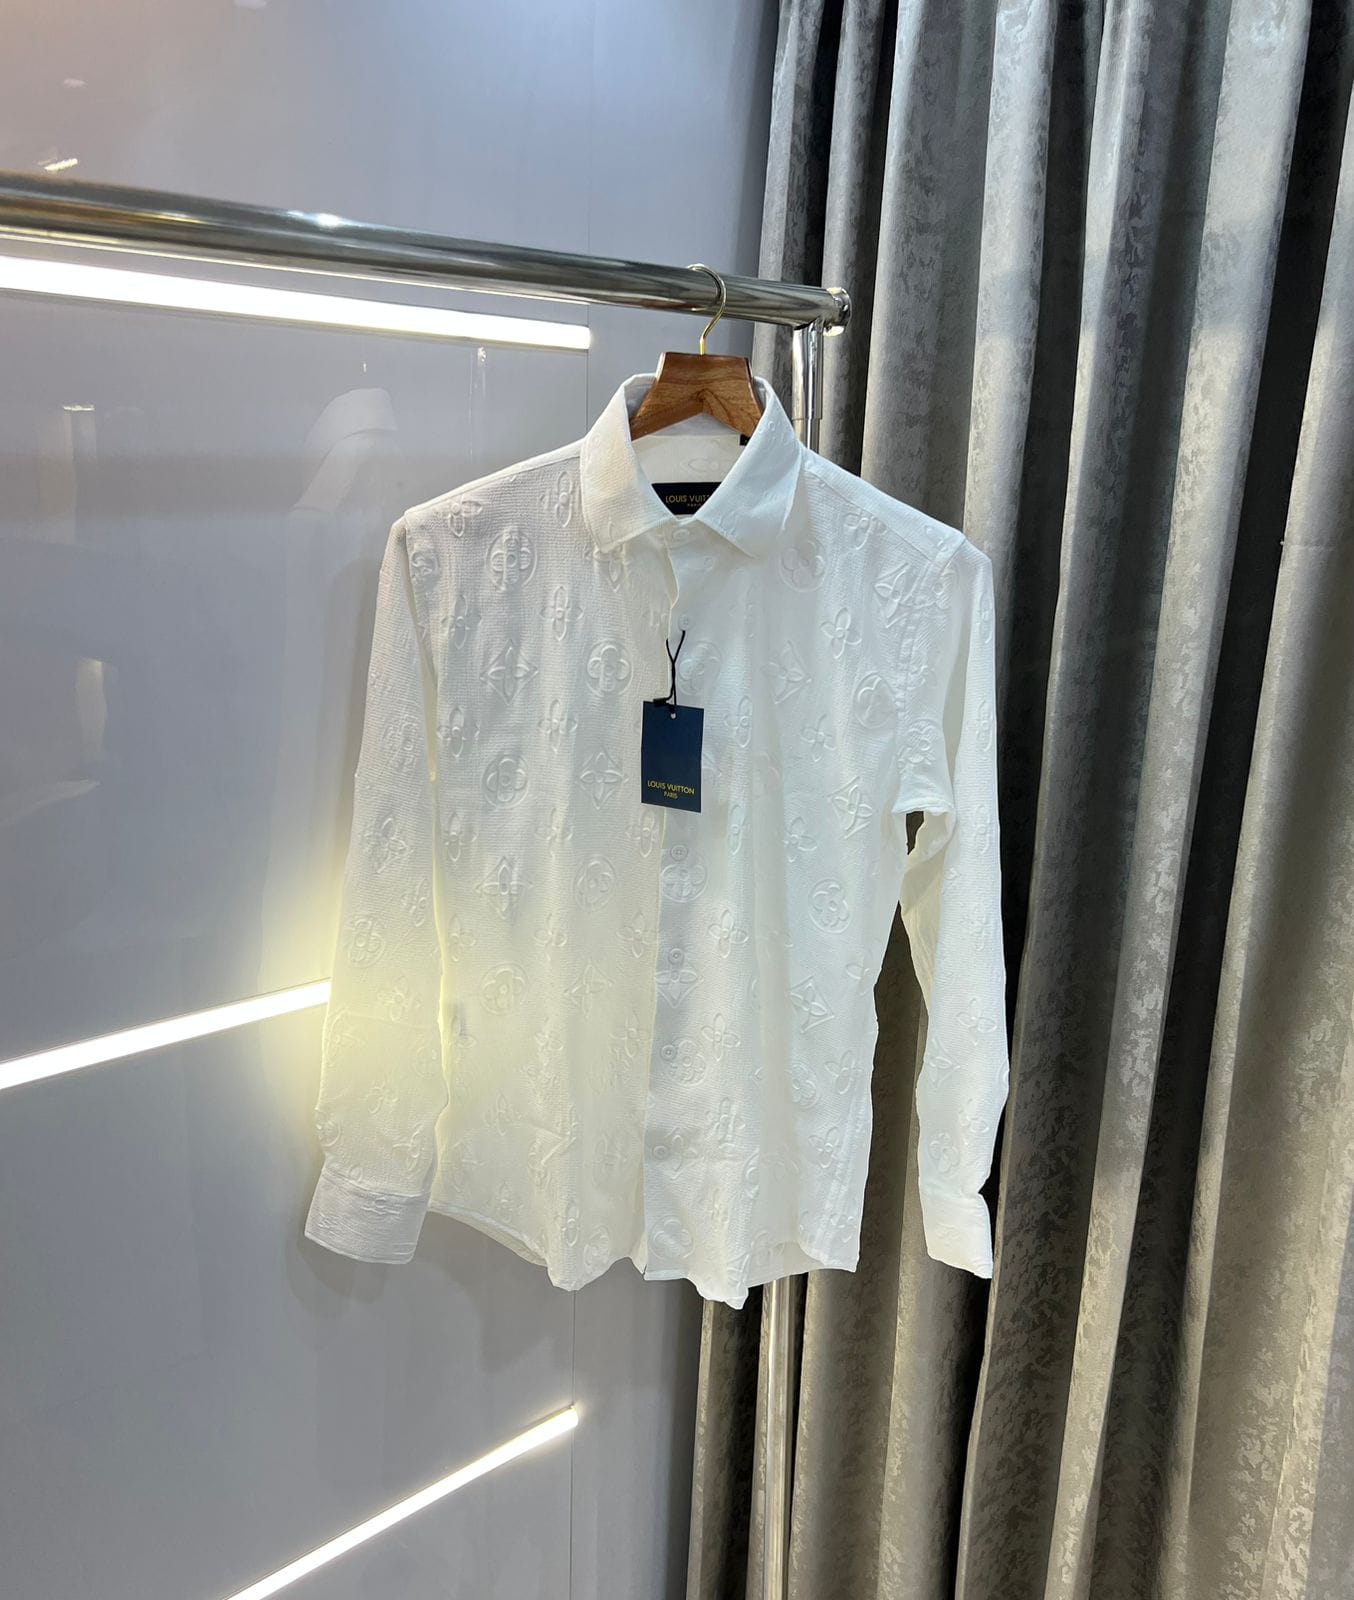 Louis Vuitton Monogram Dress Shirt - White Dress Shirts, Clothing